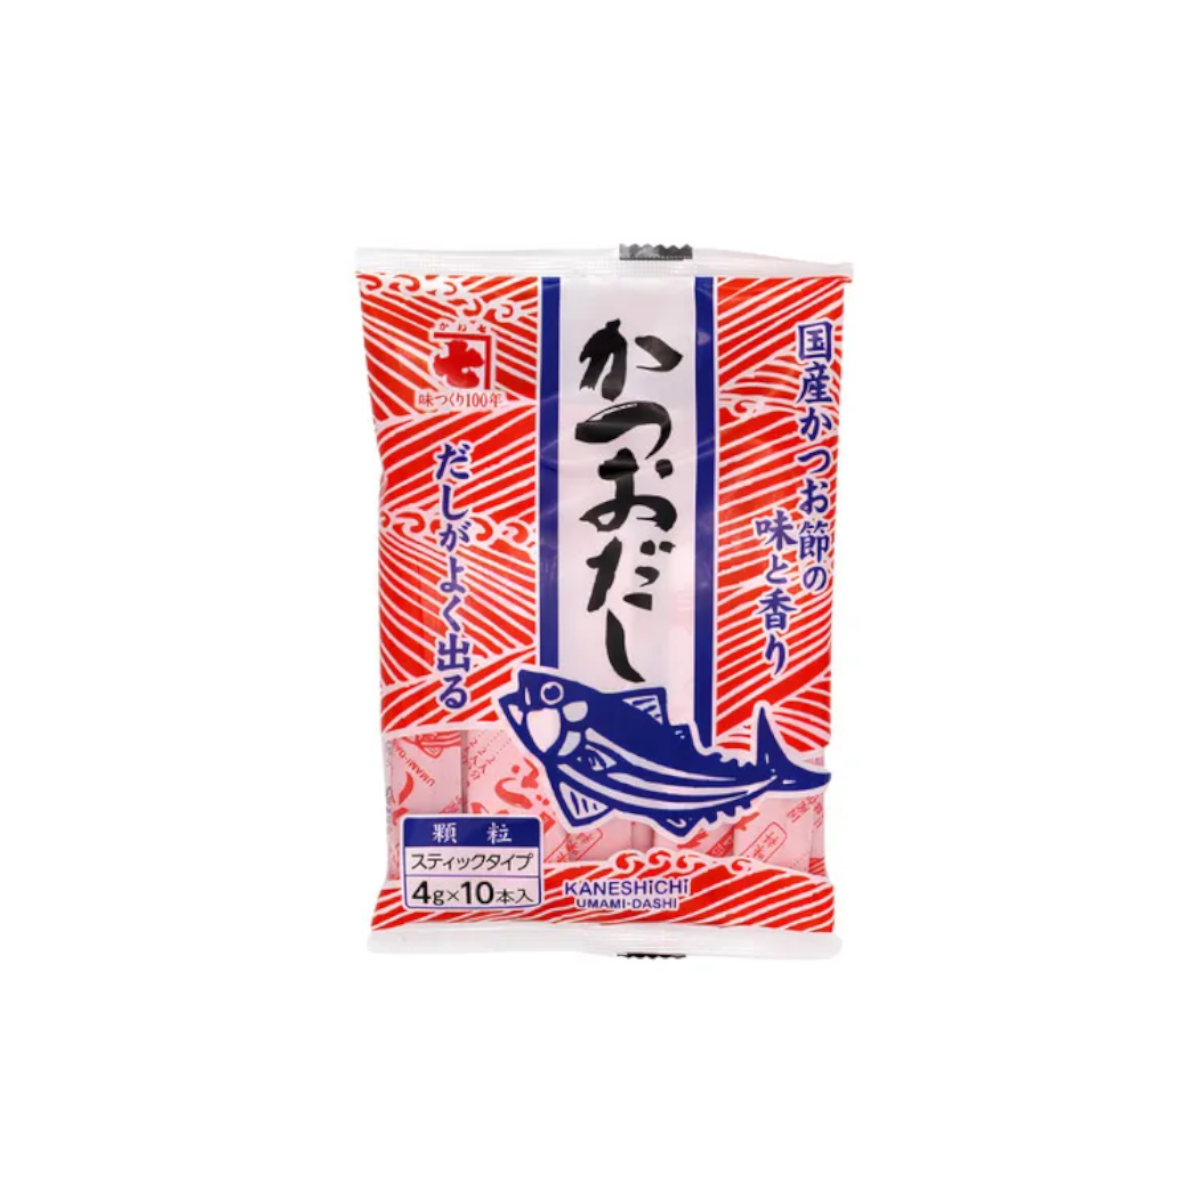 Tempero de Peixe Bonito Katsuo Dashi Kaneshiti 10 Sachês - 40 gramas